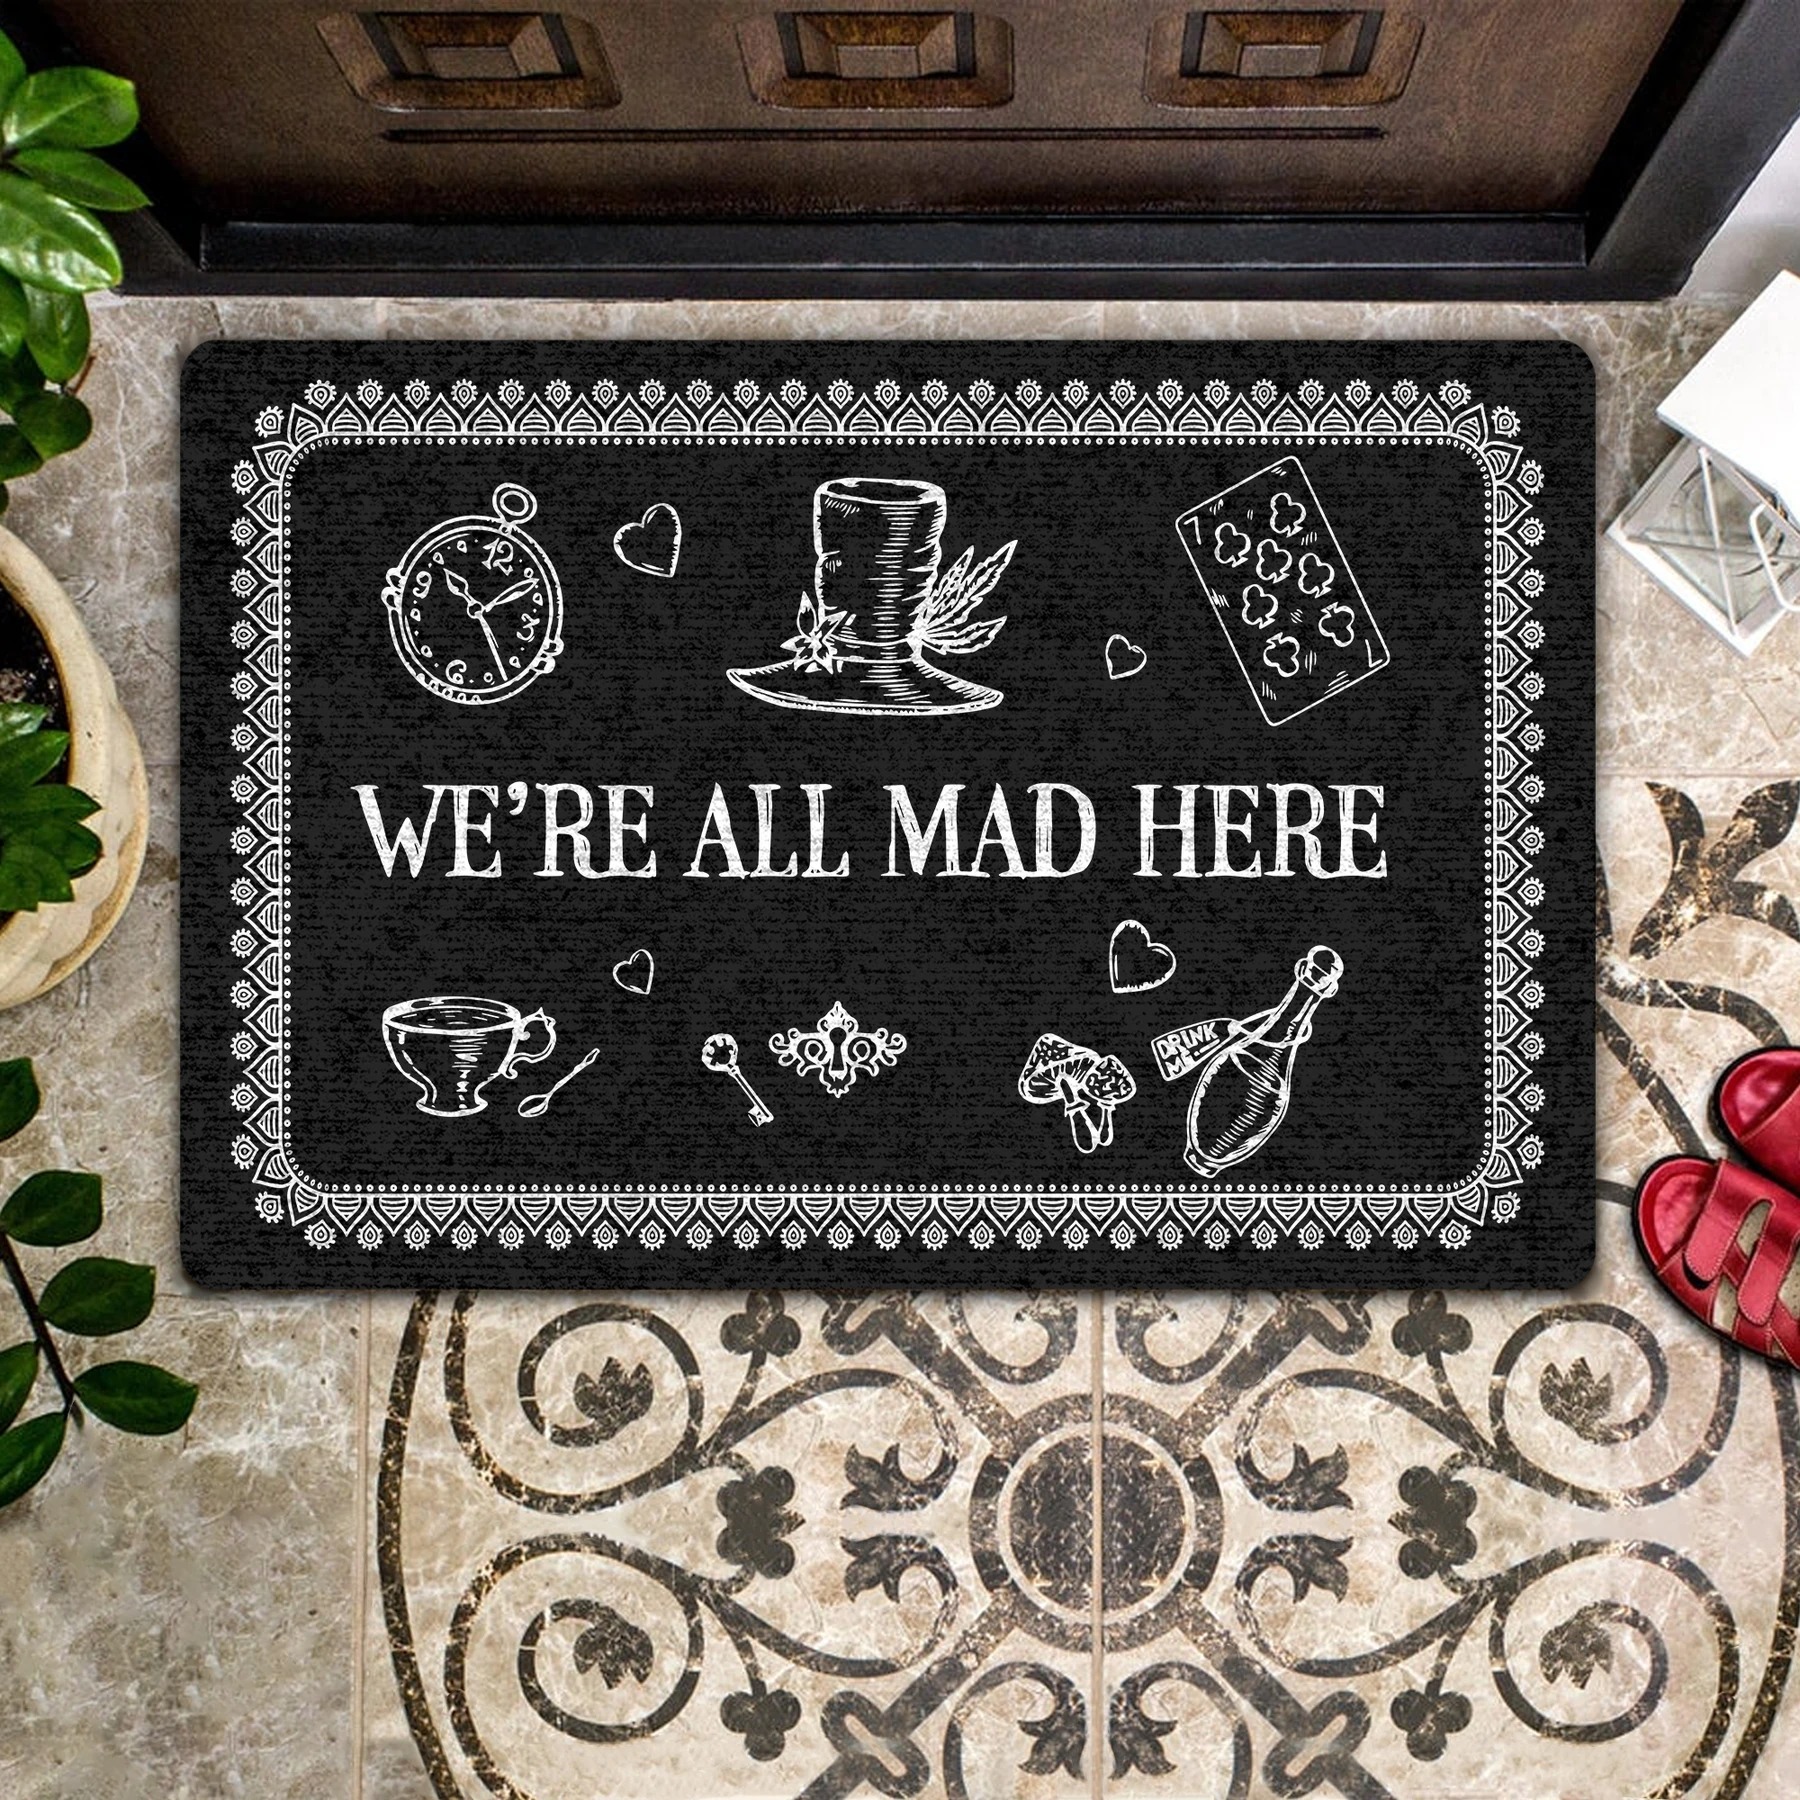 We're all mad here doormat